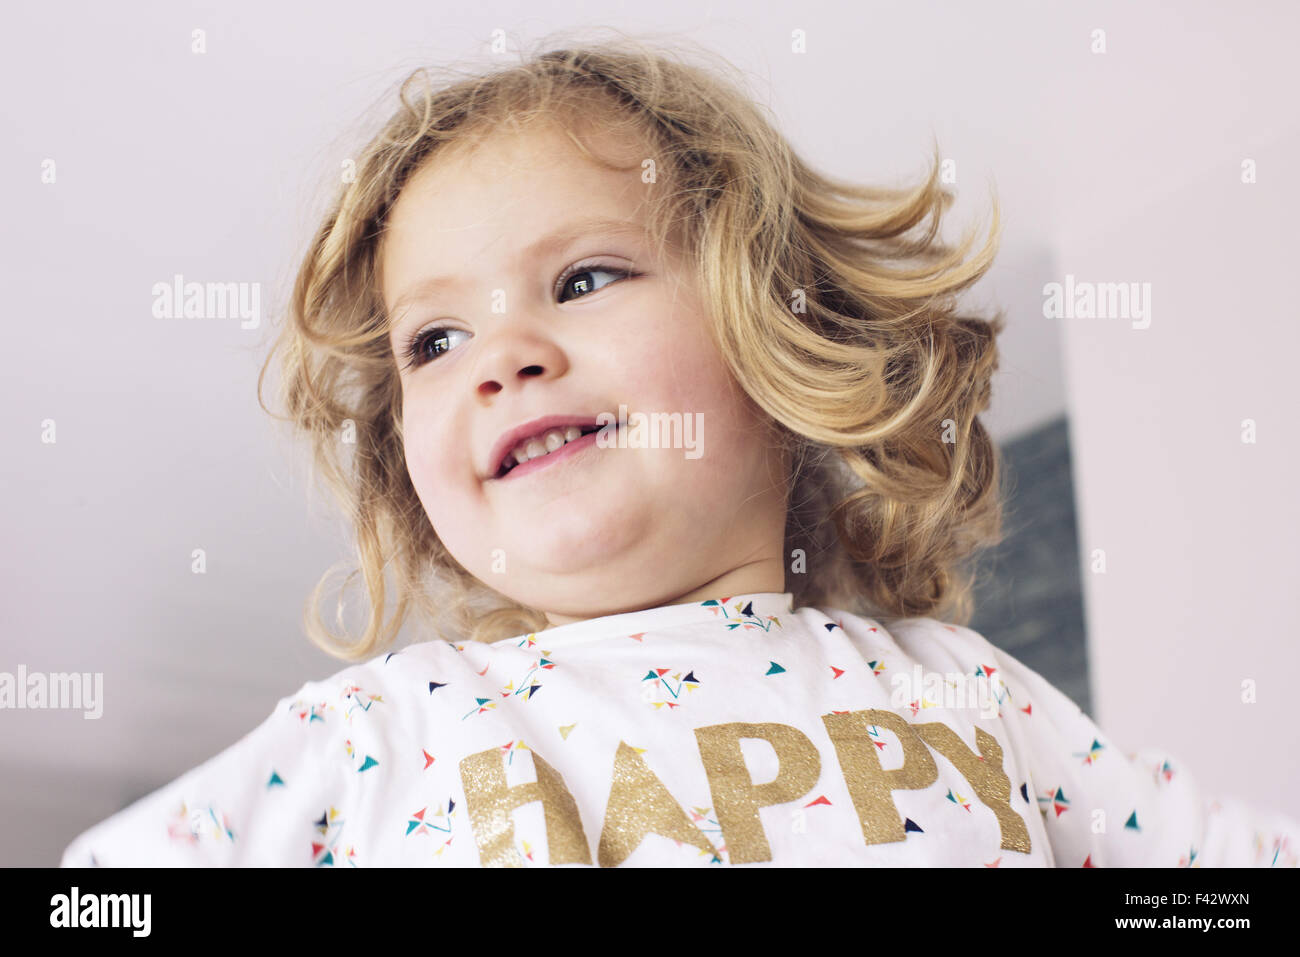 Little girl smiling, looking away, portrait Stock Photo